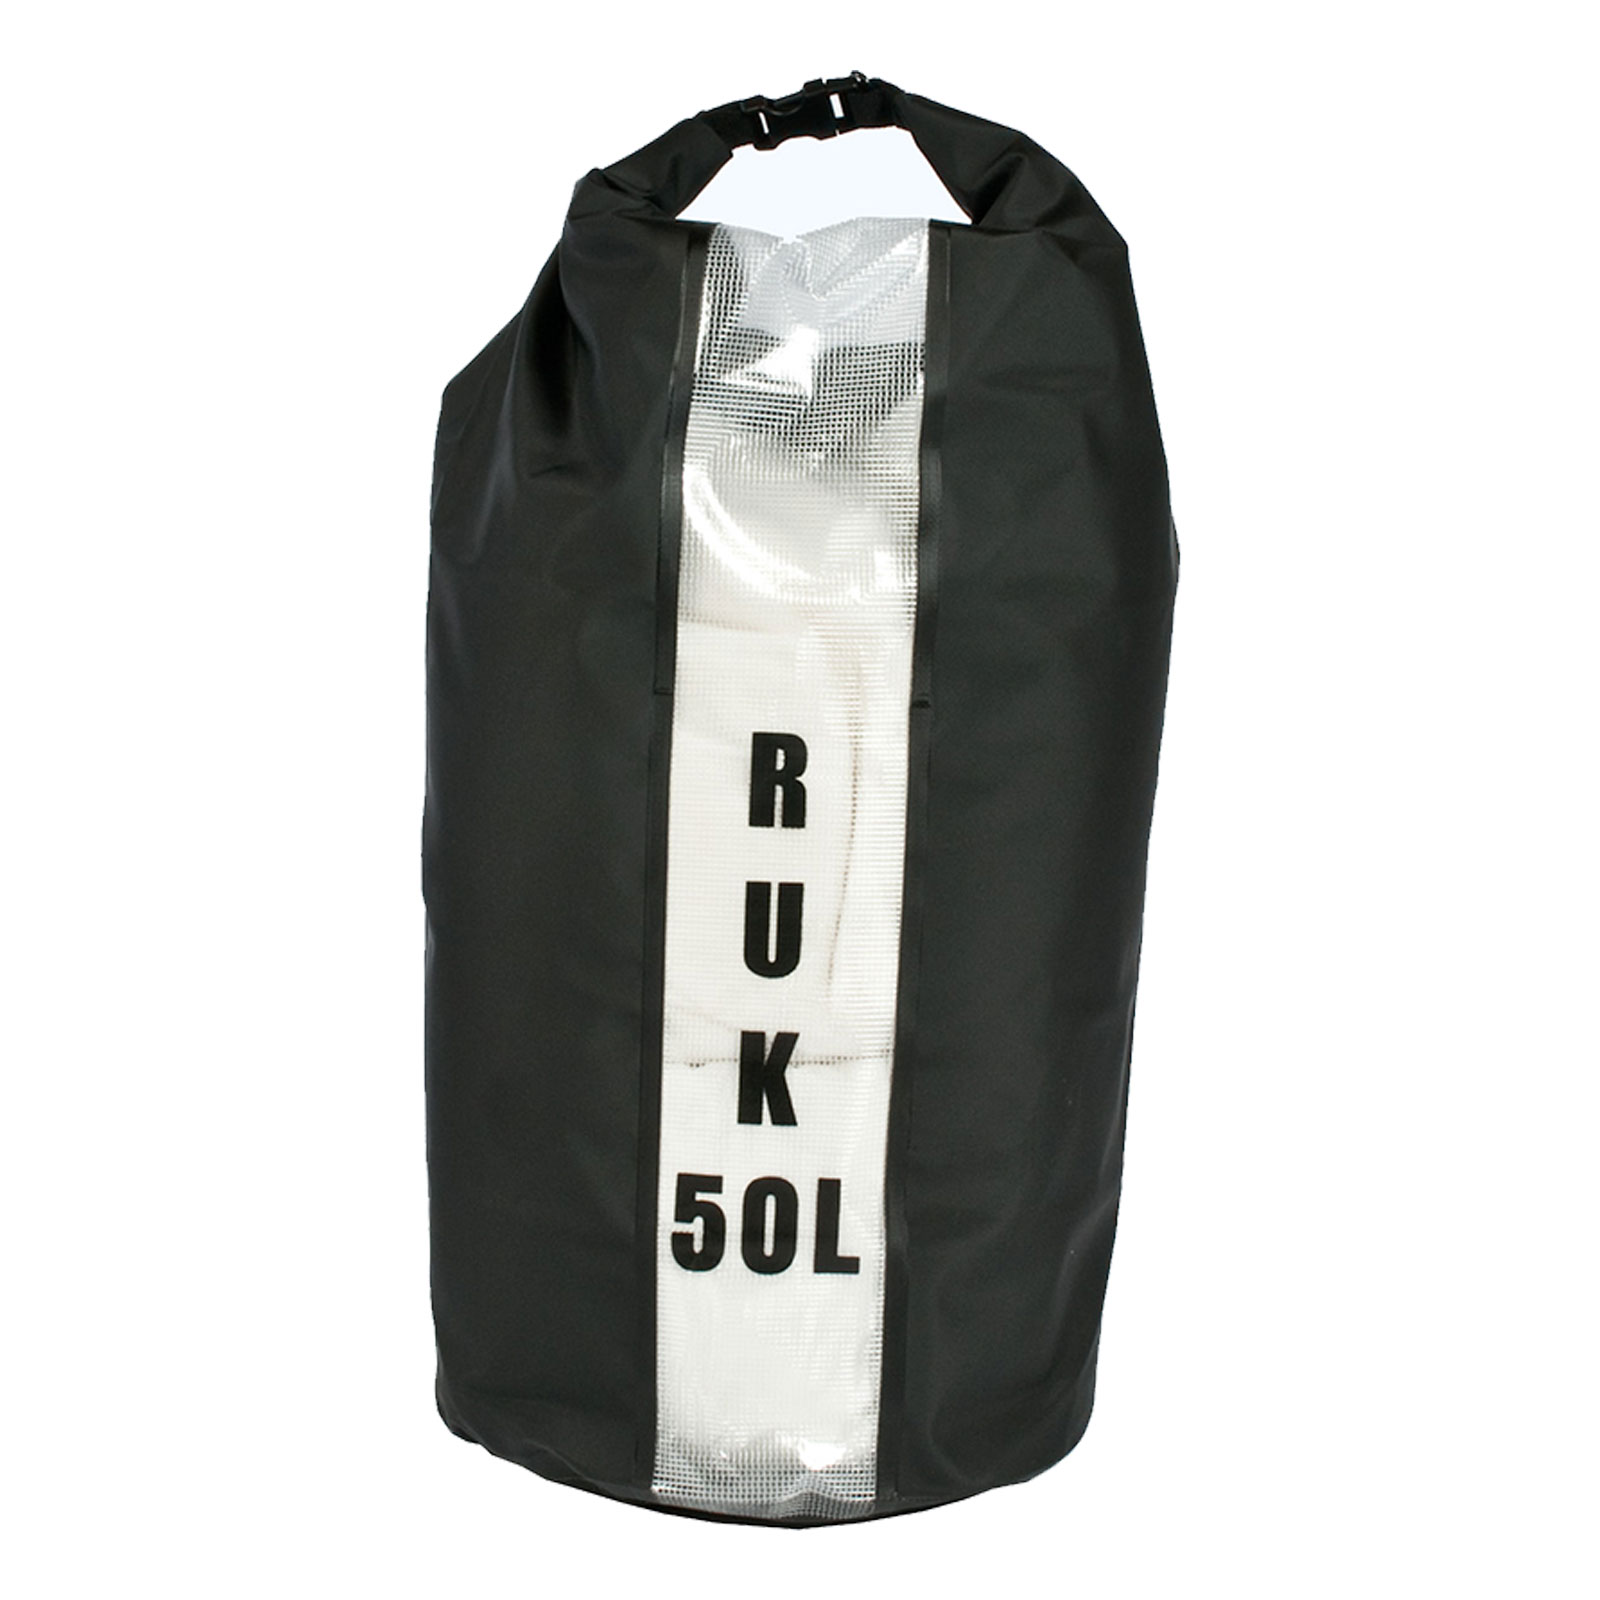 50l dry bag